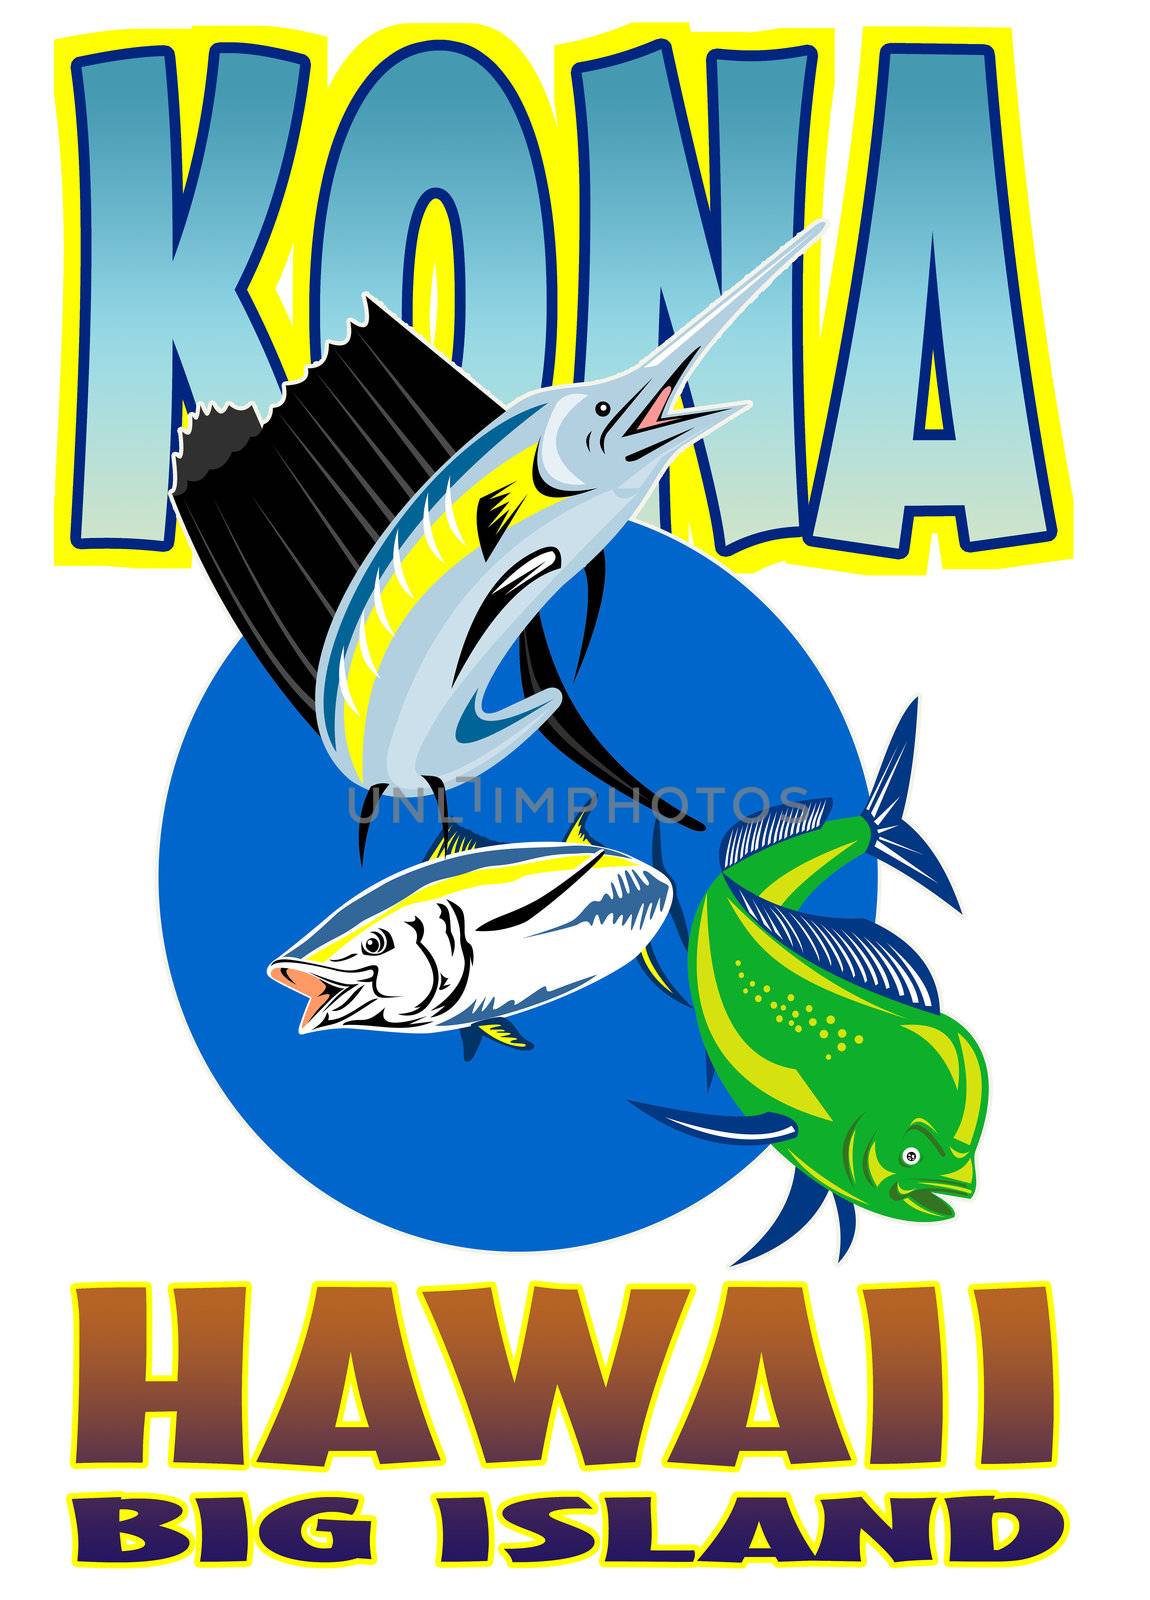 retro style illustration of a Sailfish, dorado dolphin fish or mahi-mahi and yellow fin tuna with words "Kona Hawaii, Big Island"